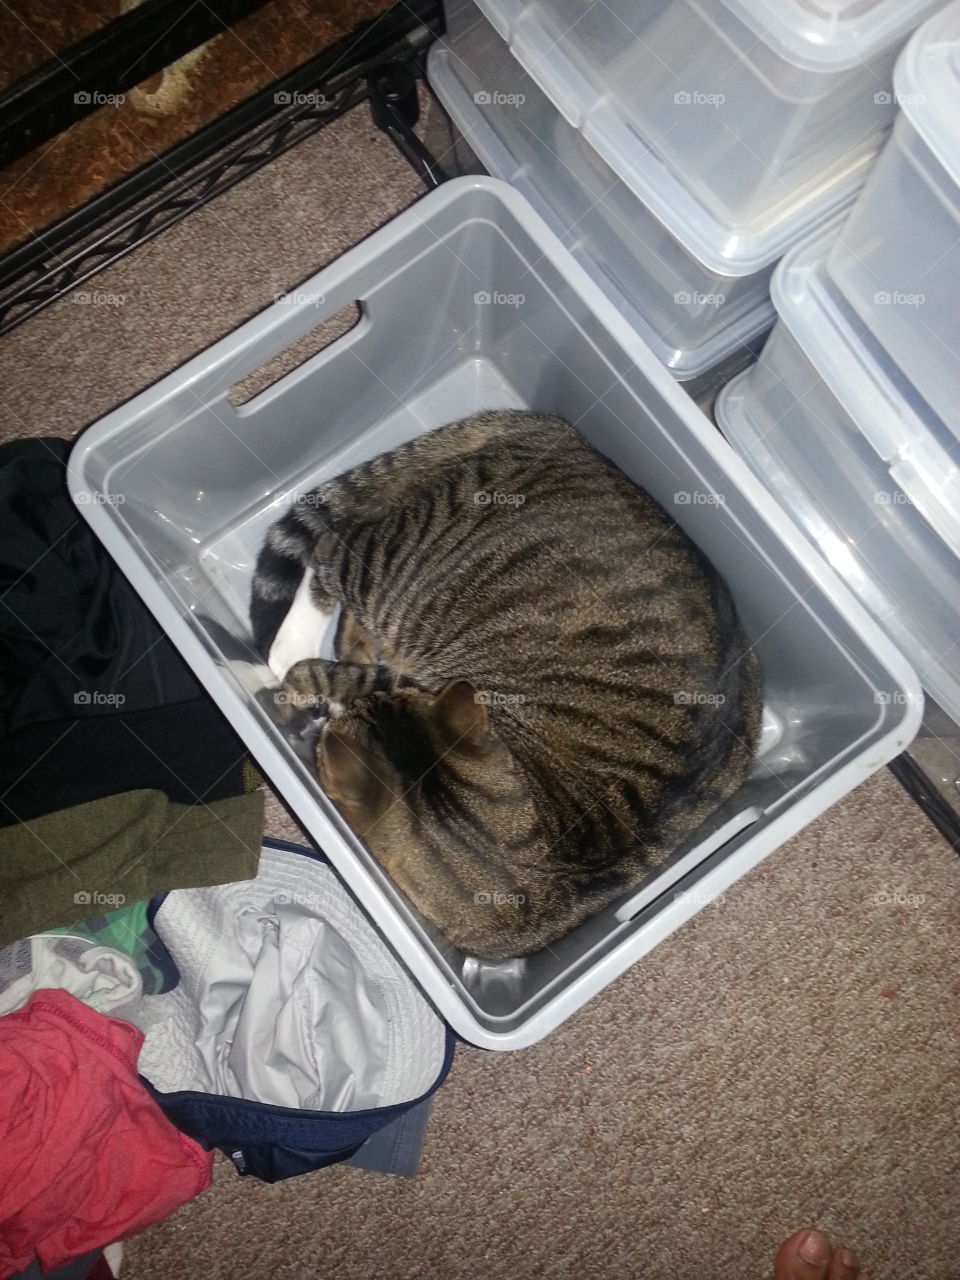 Cats will sleep anywhere